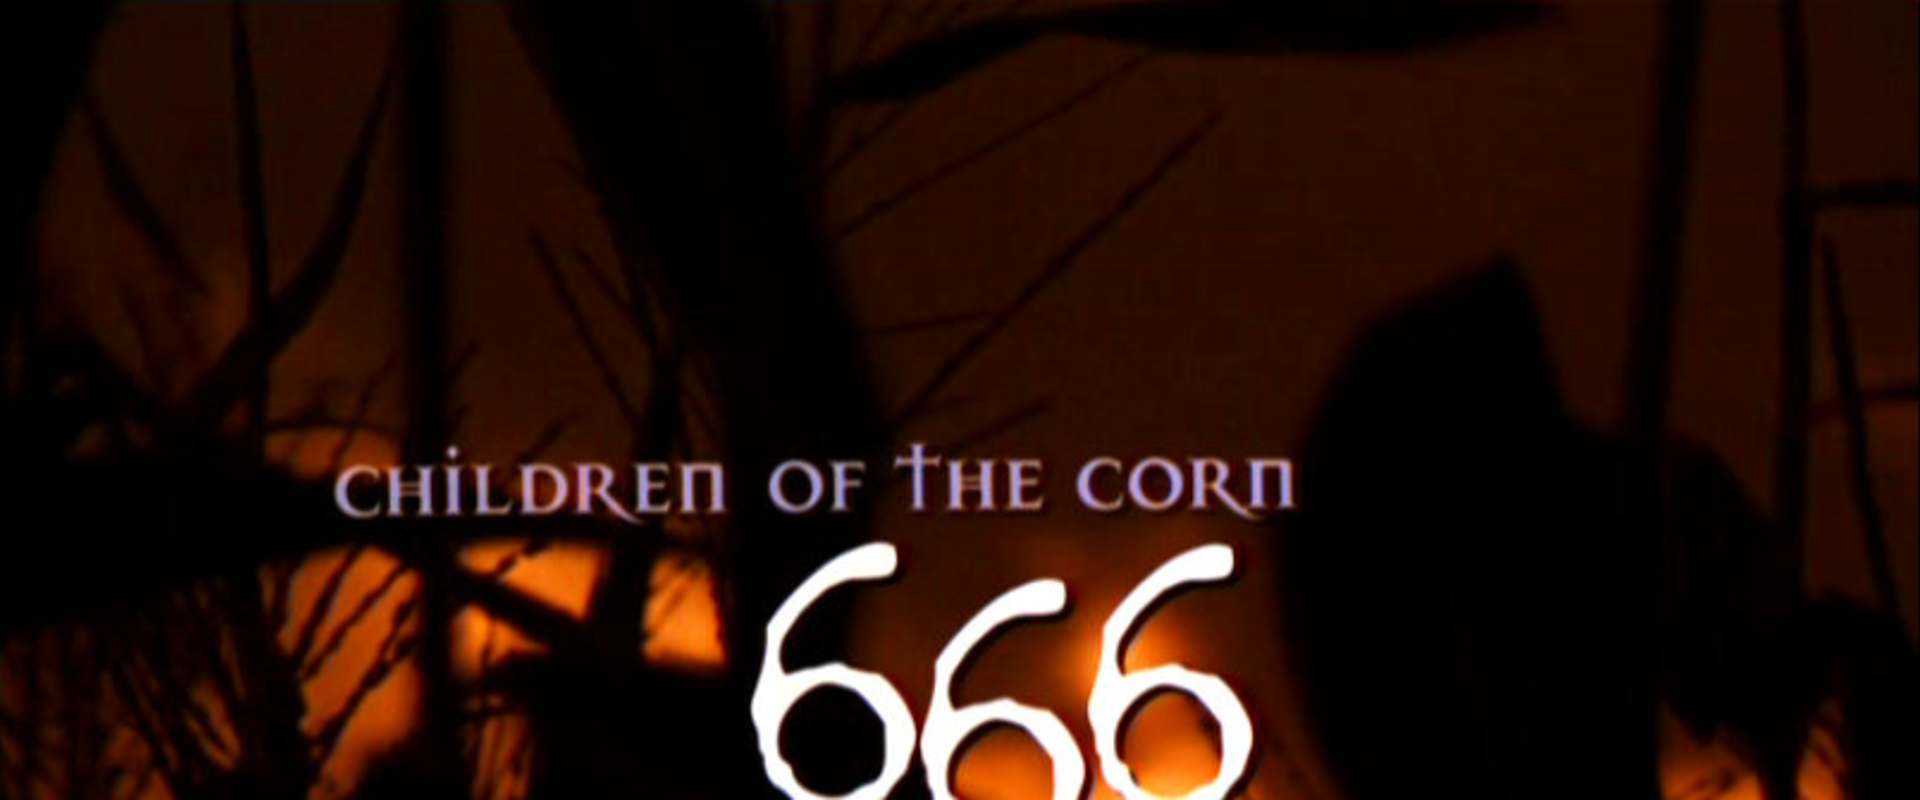 Children of the Corn 666: Isaac's Return background 2